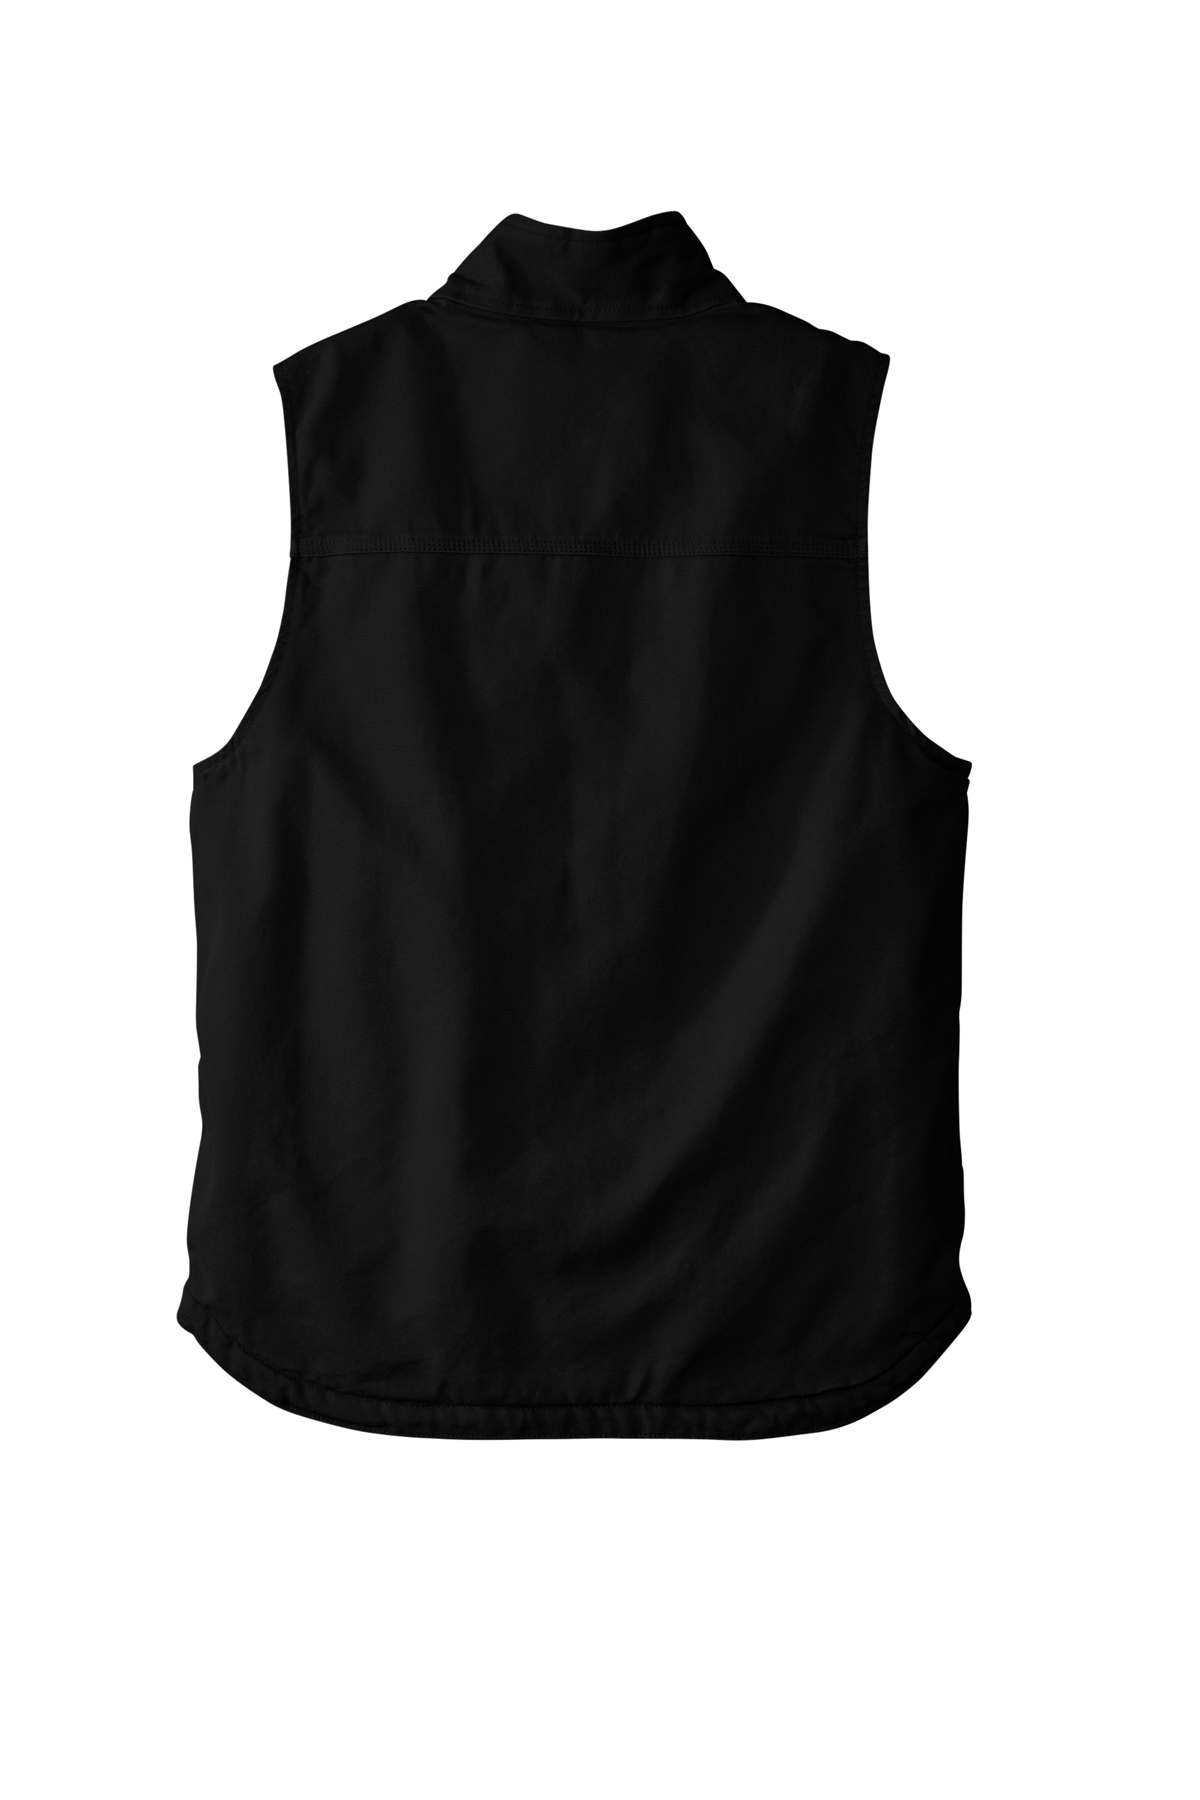 Carhartt Sherpa-Lined Mock Neck Vest, Product